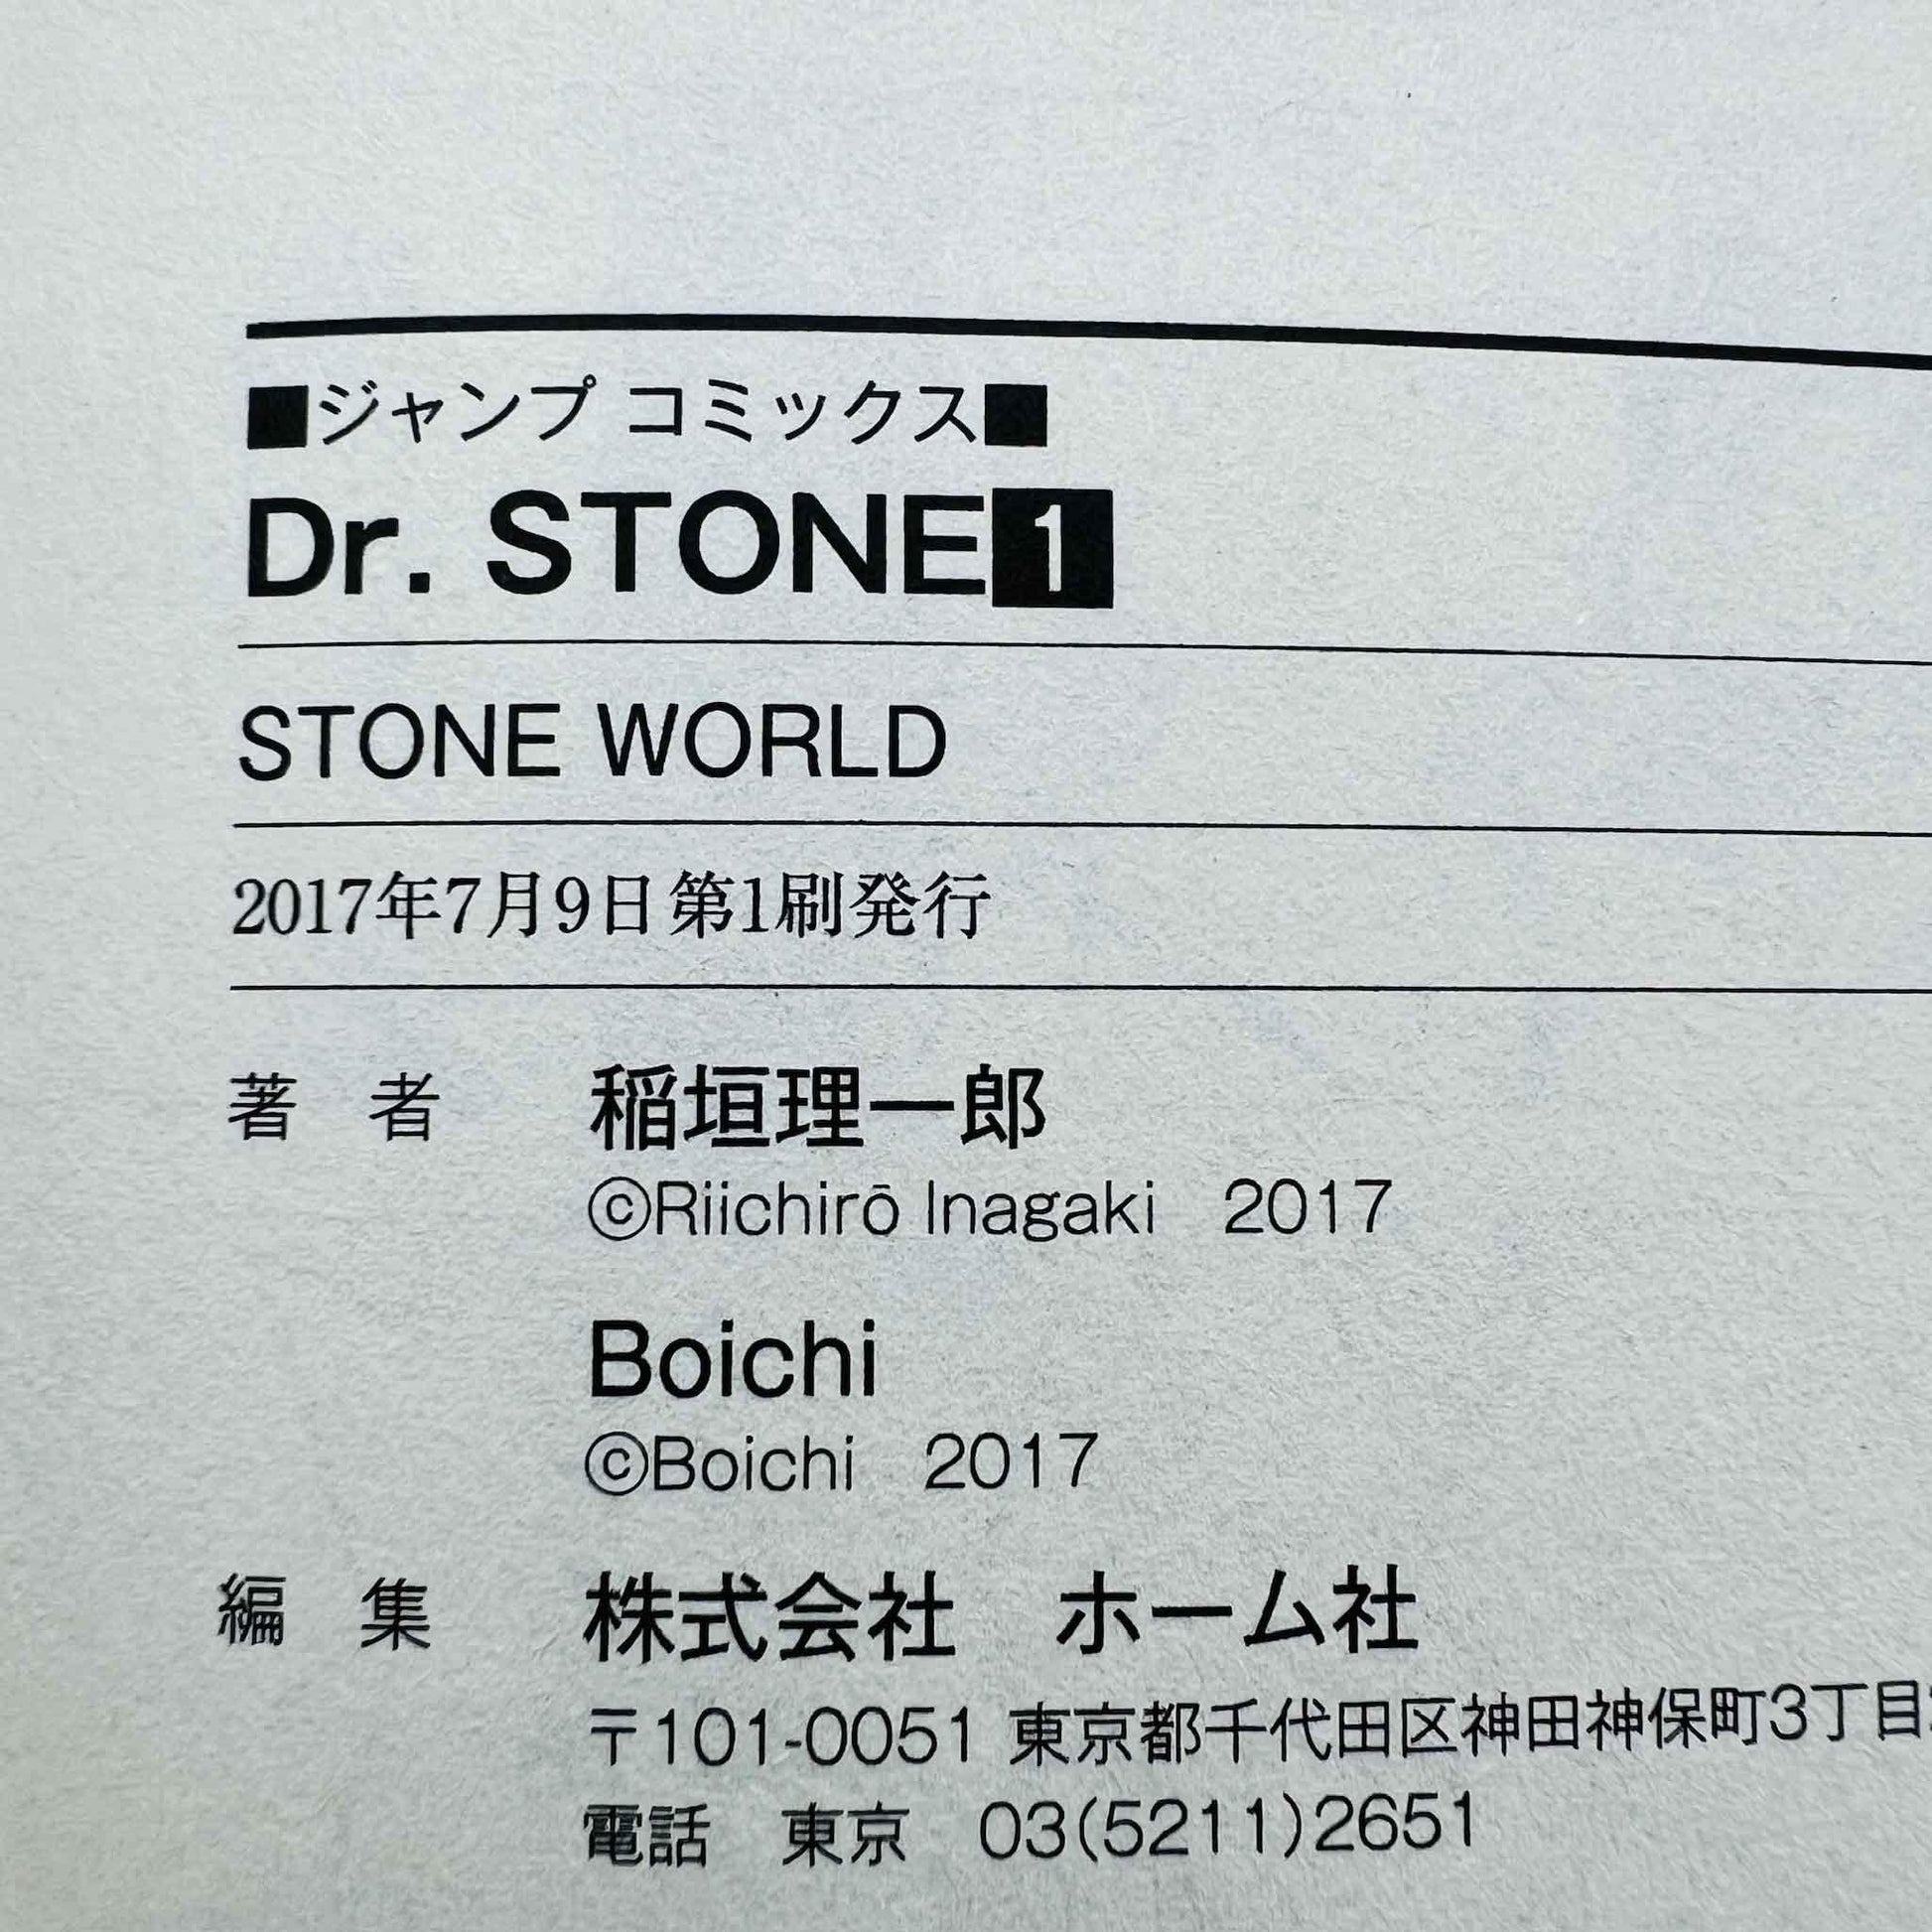 Dr. Stone - Volume 01 /w Obi - 1stPrint.net - 1st First Print Edition Manga Store - M-STONE-01-001